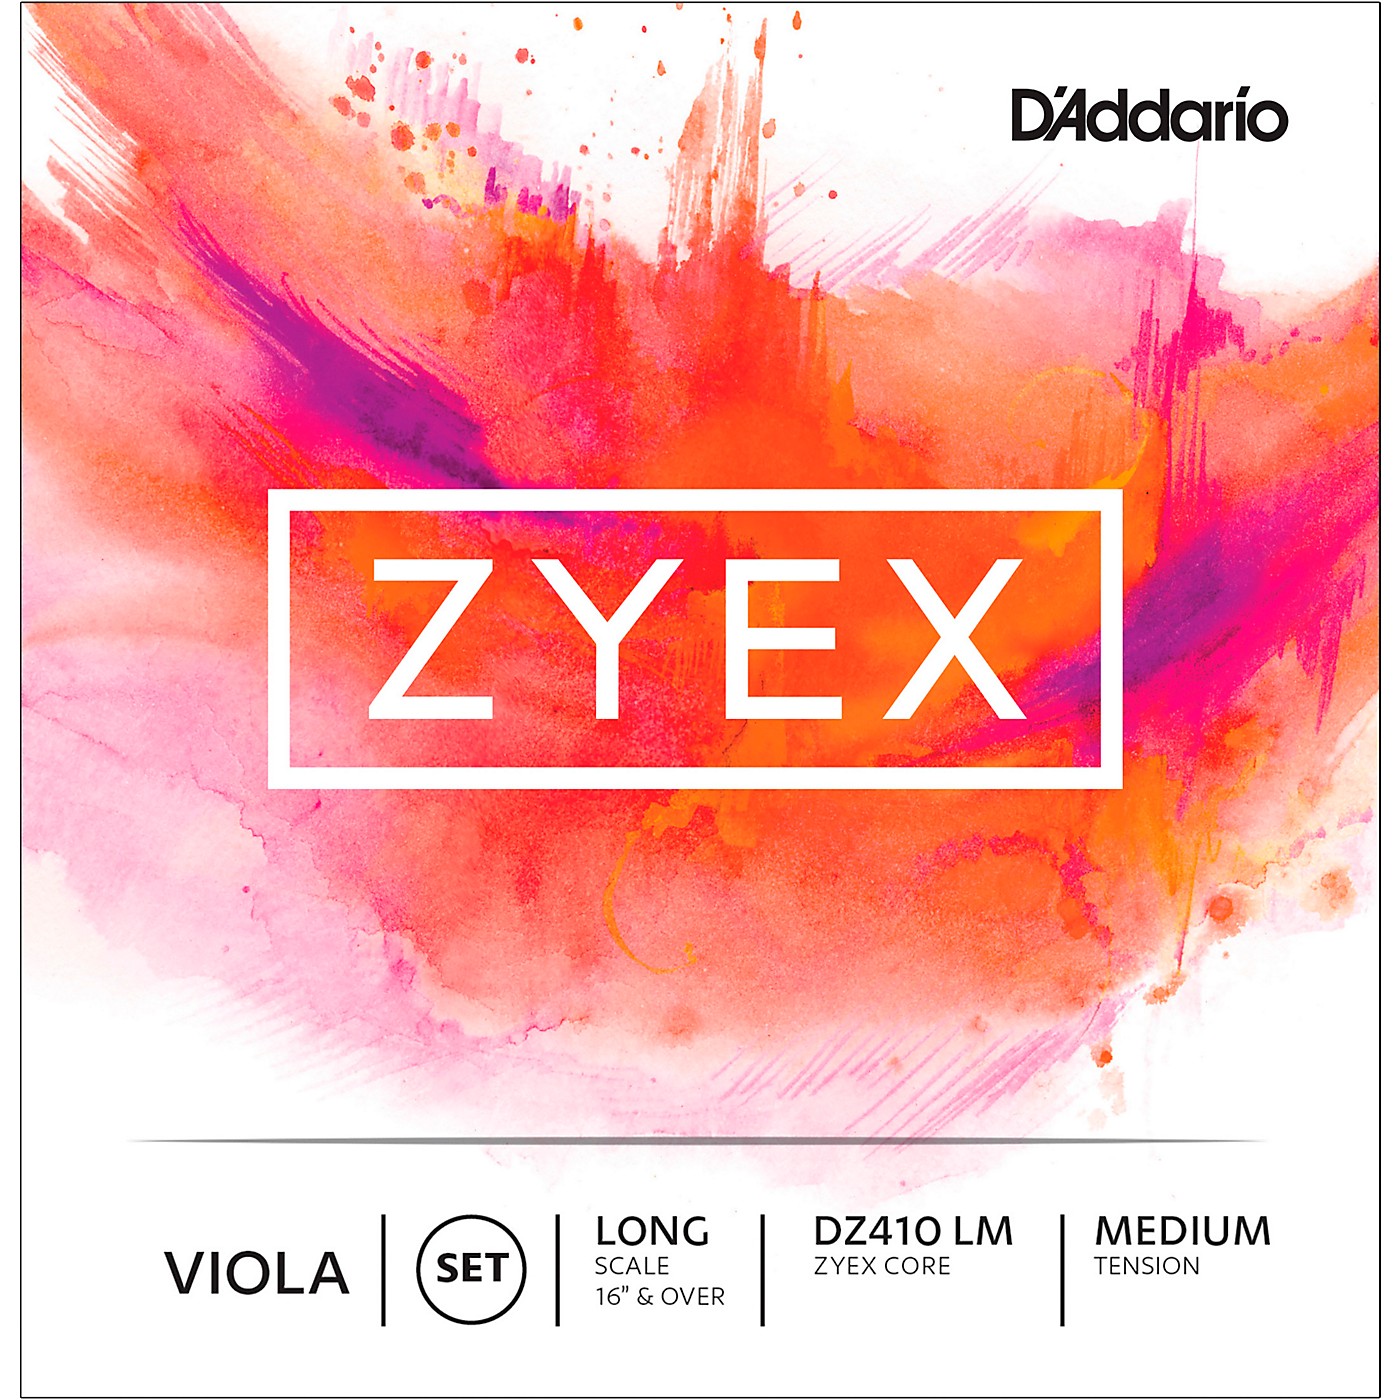 D'Addario Zyex Series Viola String Set thumbnail